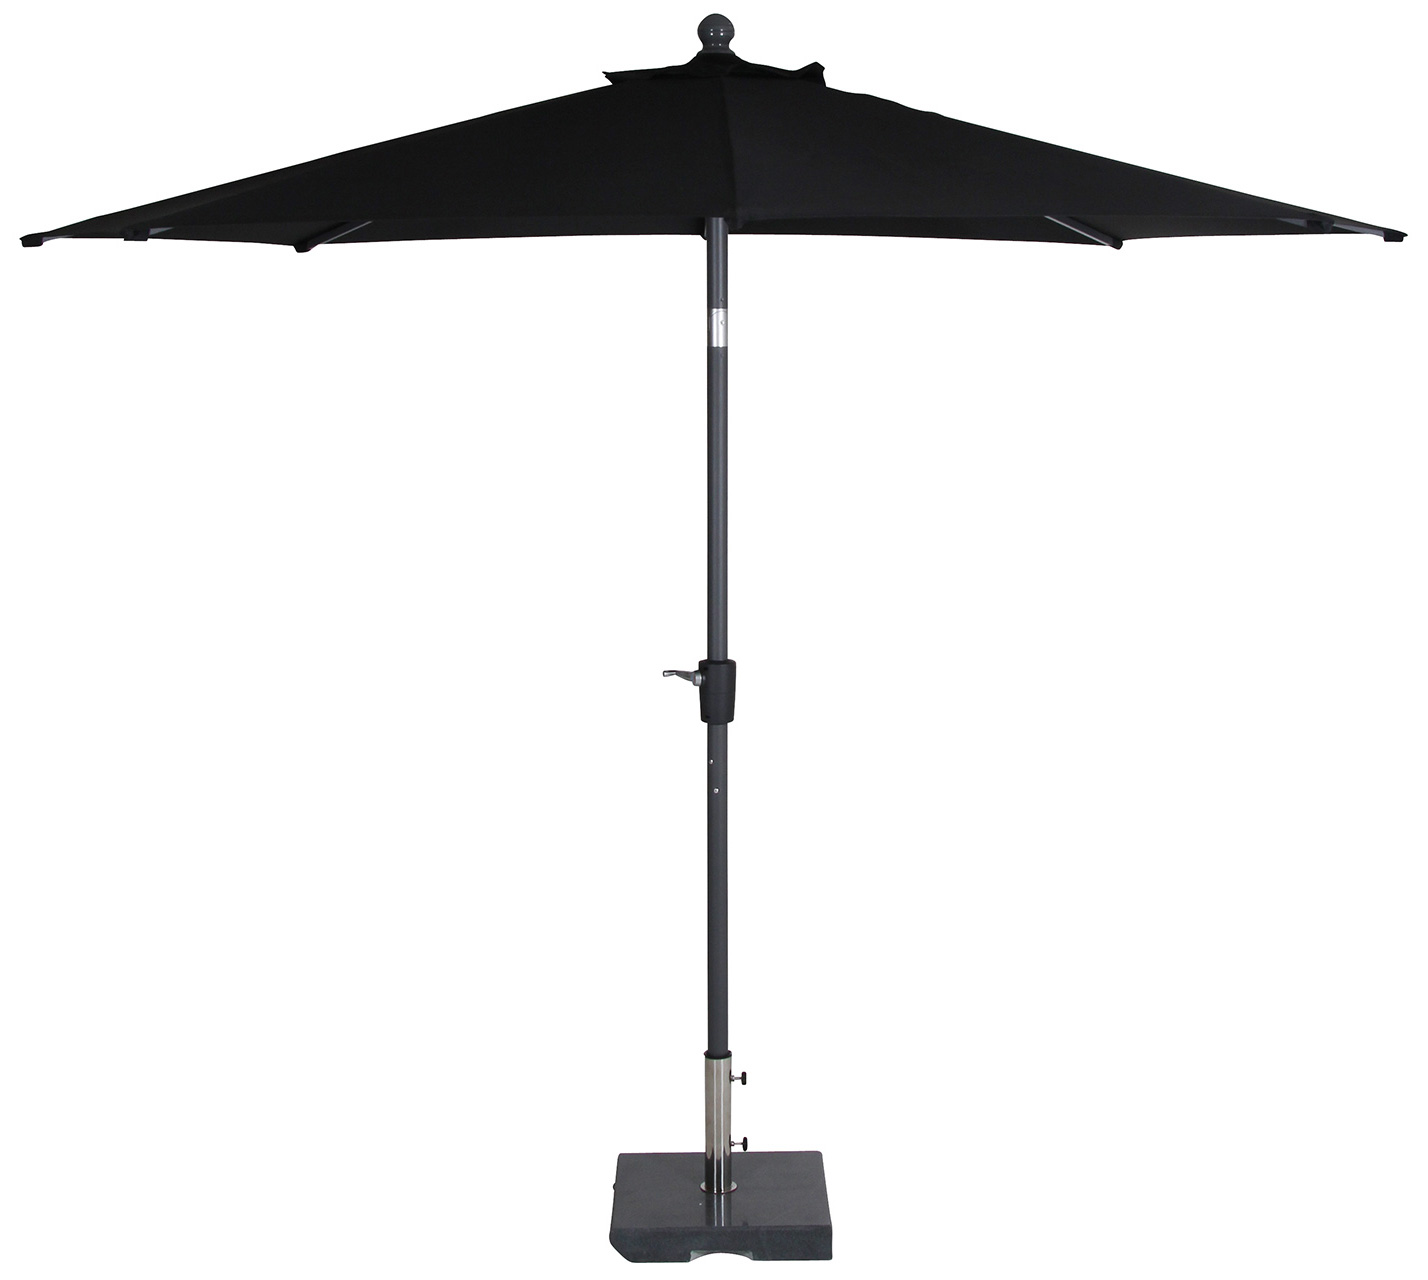 Зонтик уличный. Уличный зонт Sidewinder, 3x3 м. Зонты Brafab Varallo зонт 300. Уличный зонт Revo, d=3 м. Уличный зонт Atene, 3x3 м.